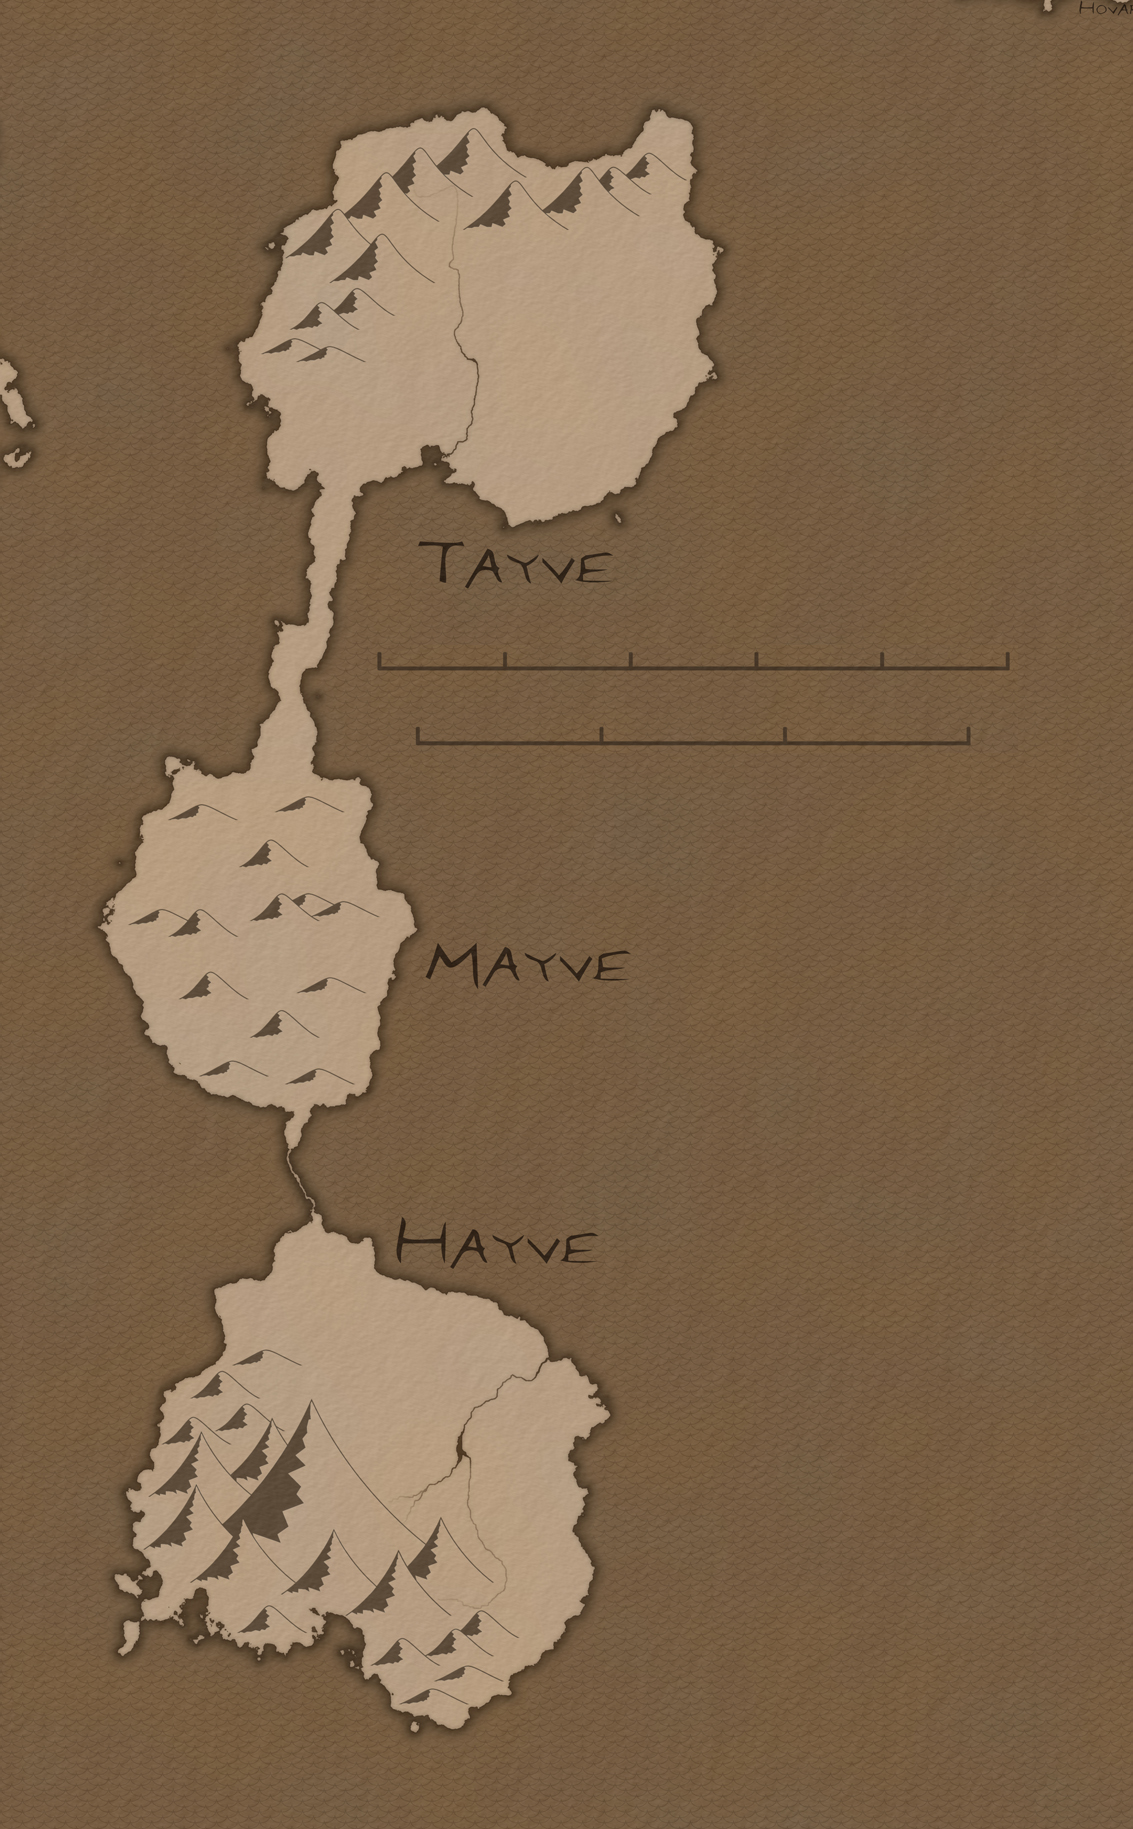 Hayve, Mayve, and Tayve